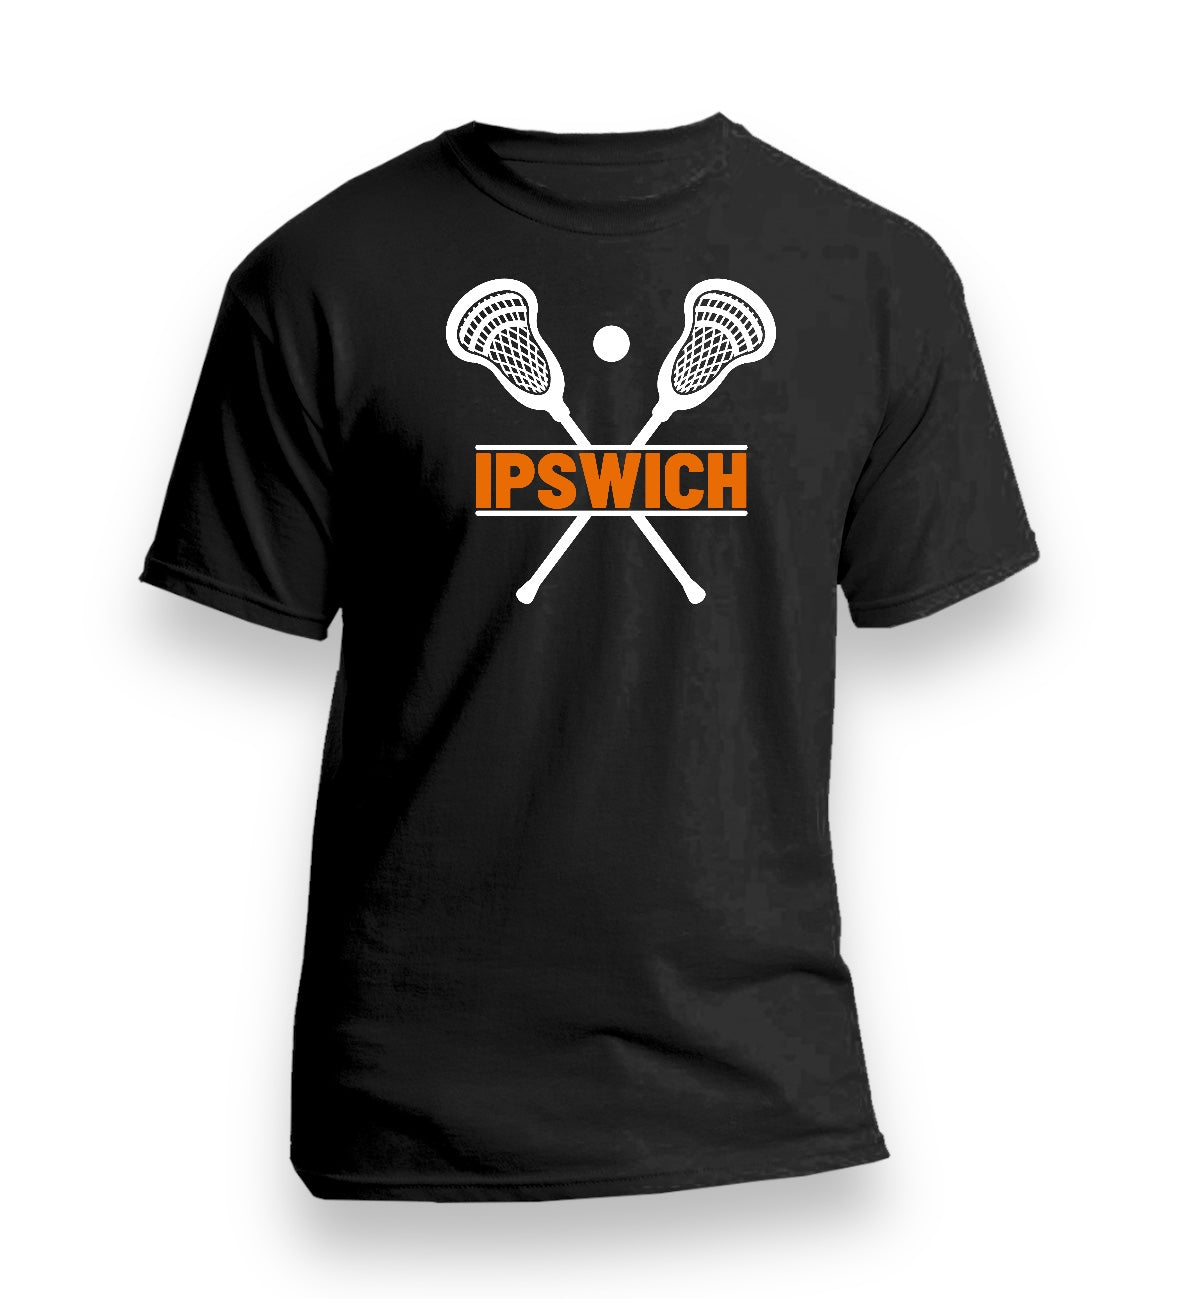 Ipswich Lacrosse Classic T-shirts (Adults)